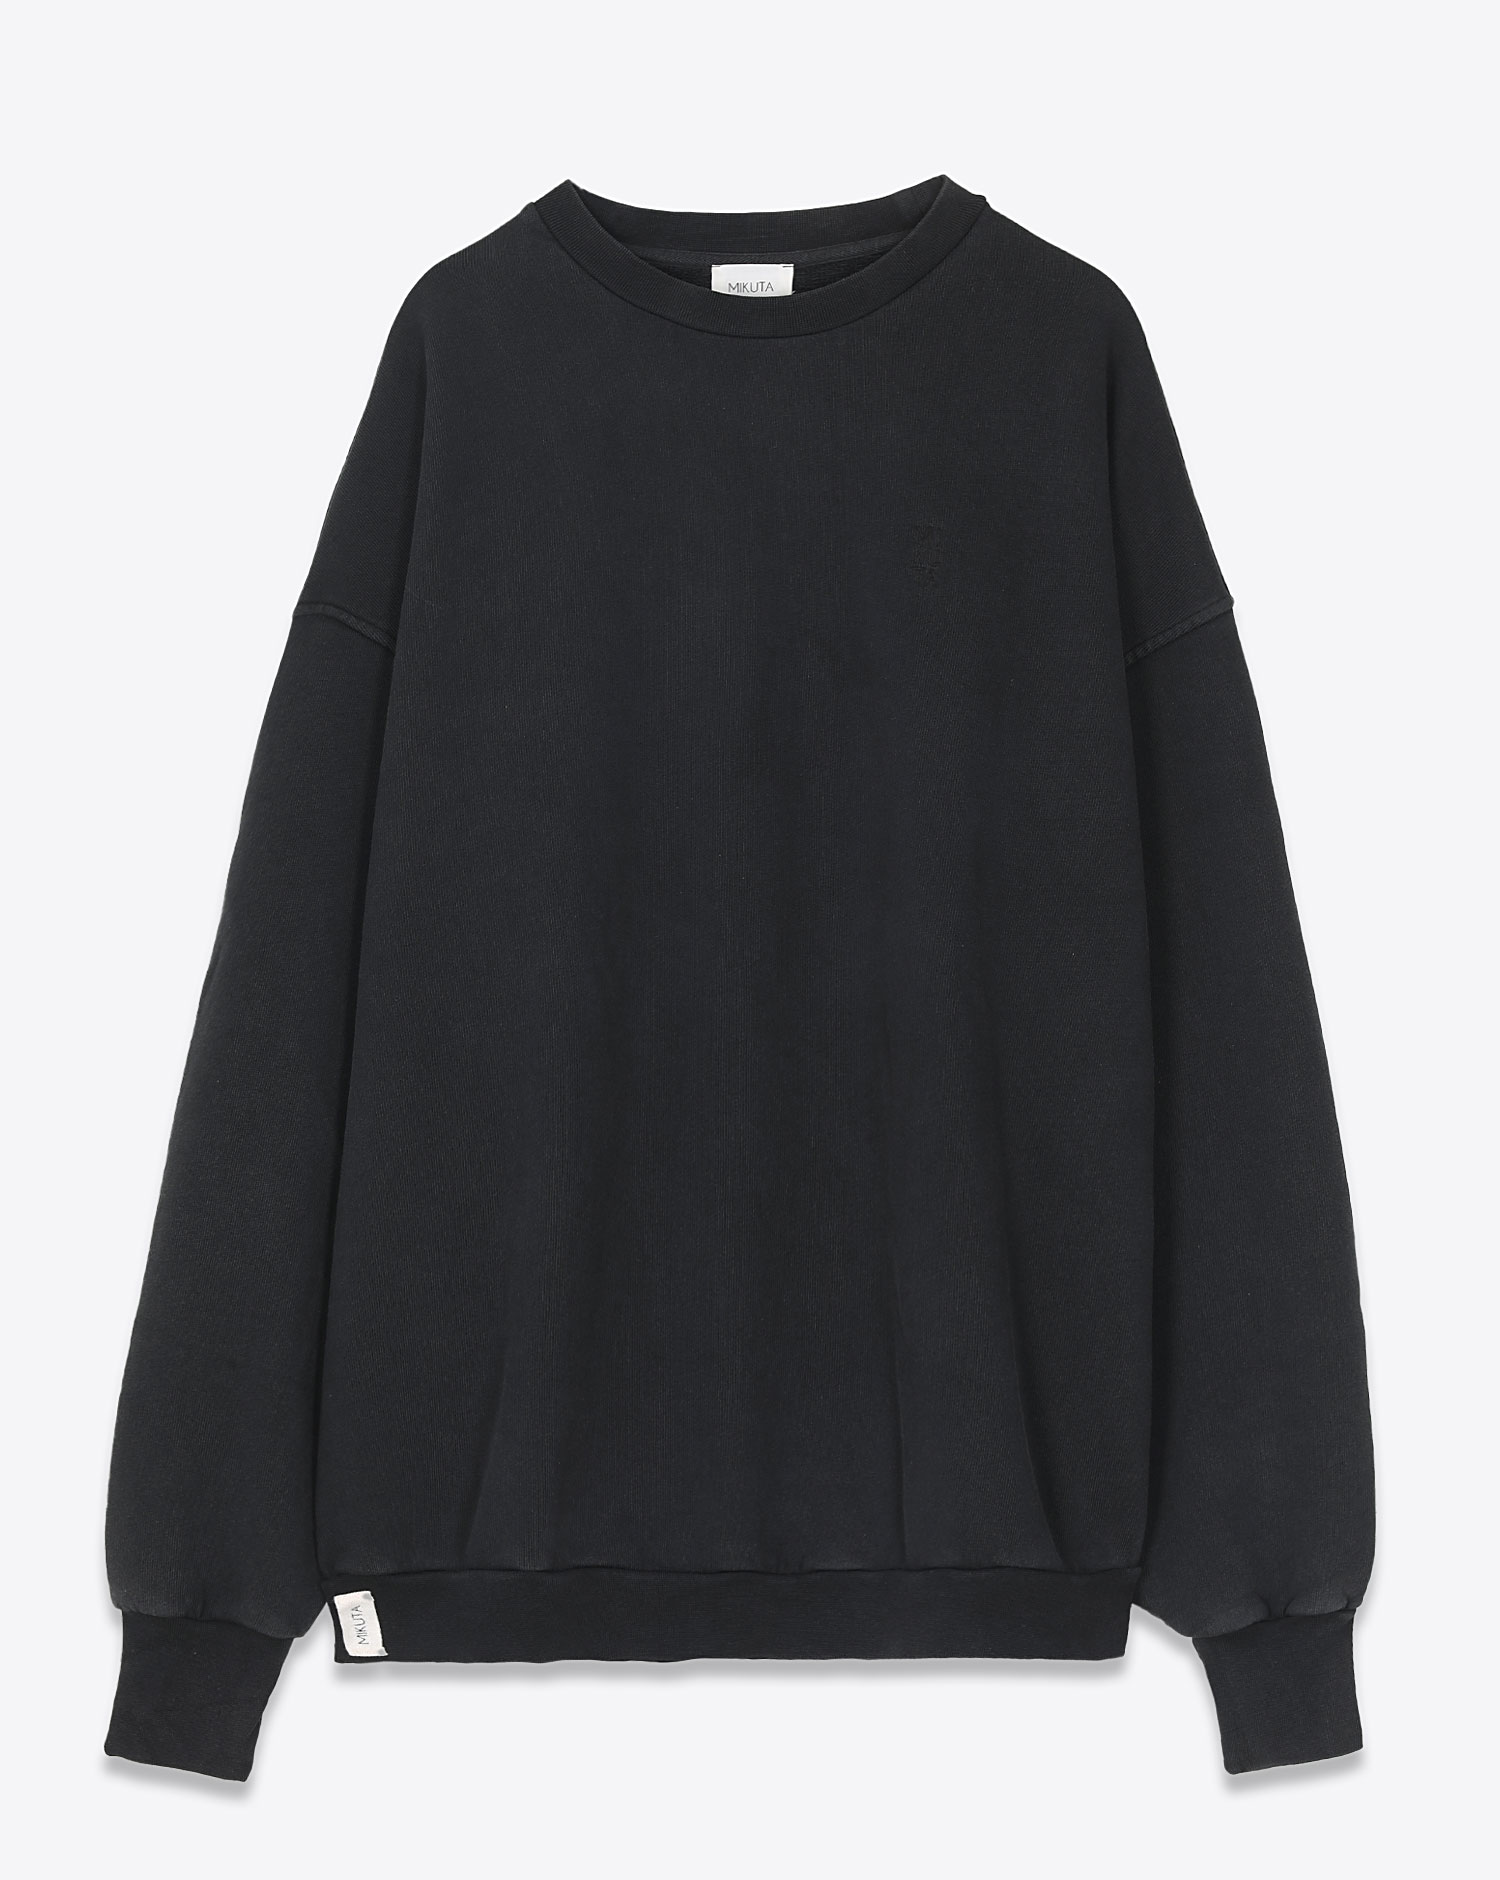 Cool Noir Crewneck Sweater